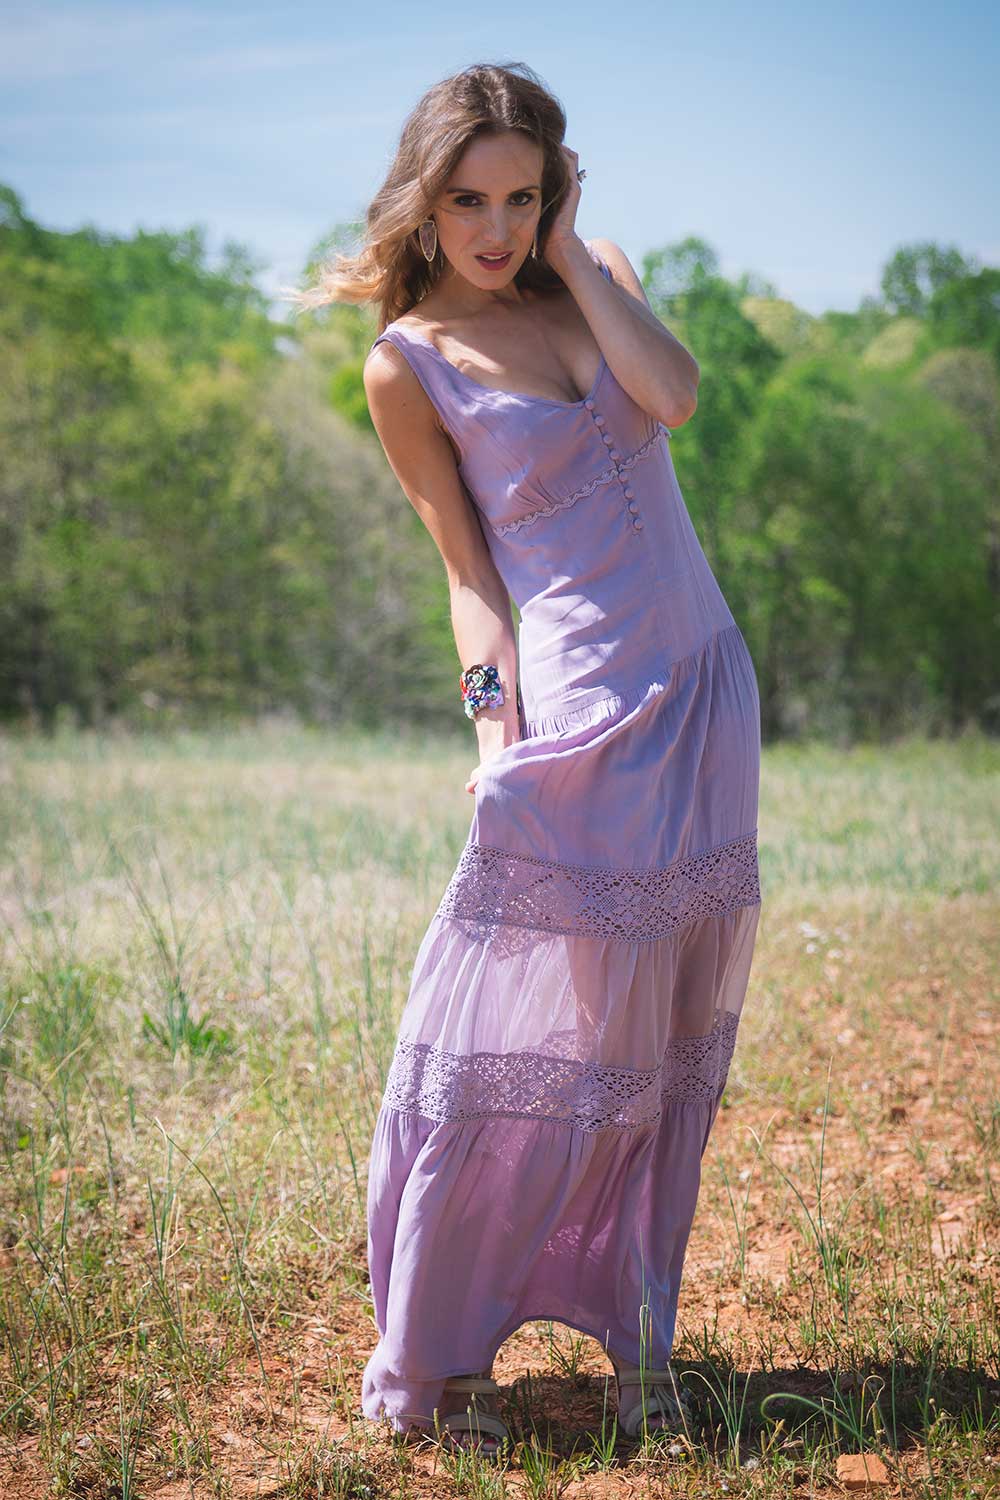 Lifestyle Blogger Samantha Busch in a lilac purple dress.